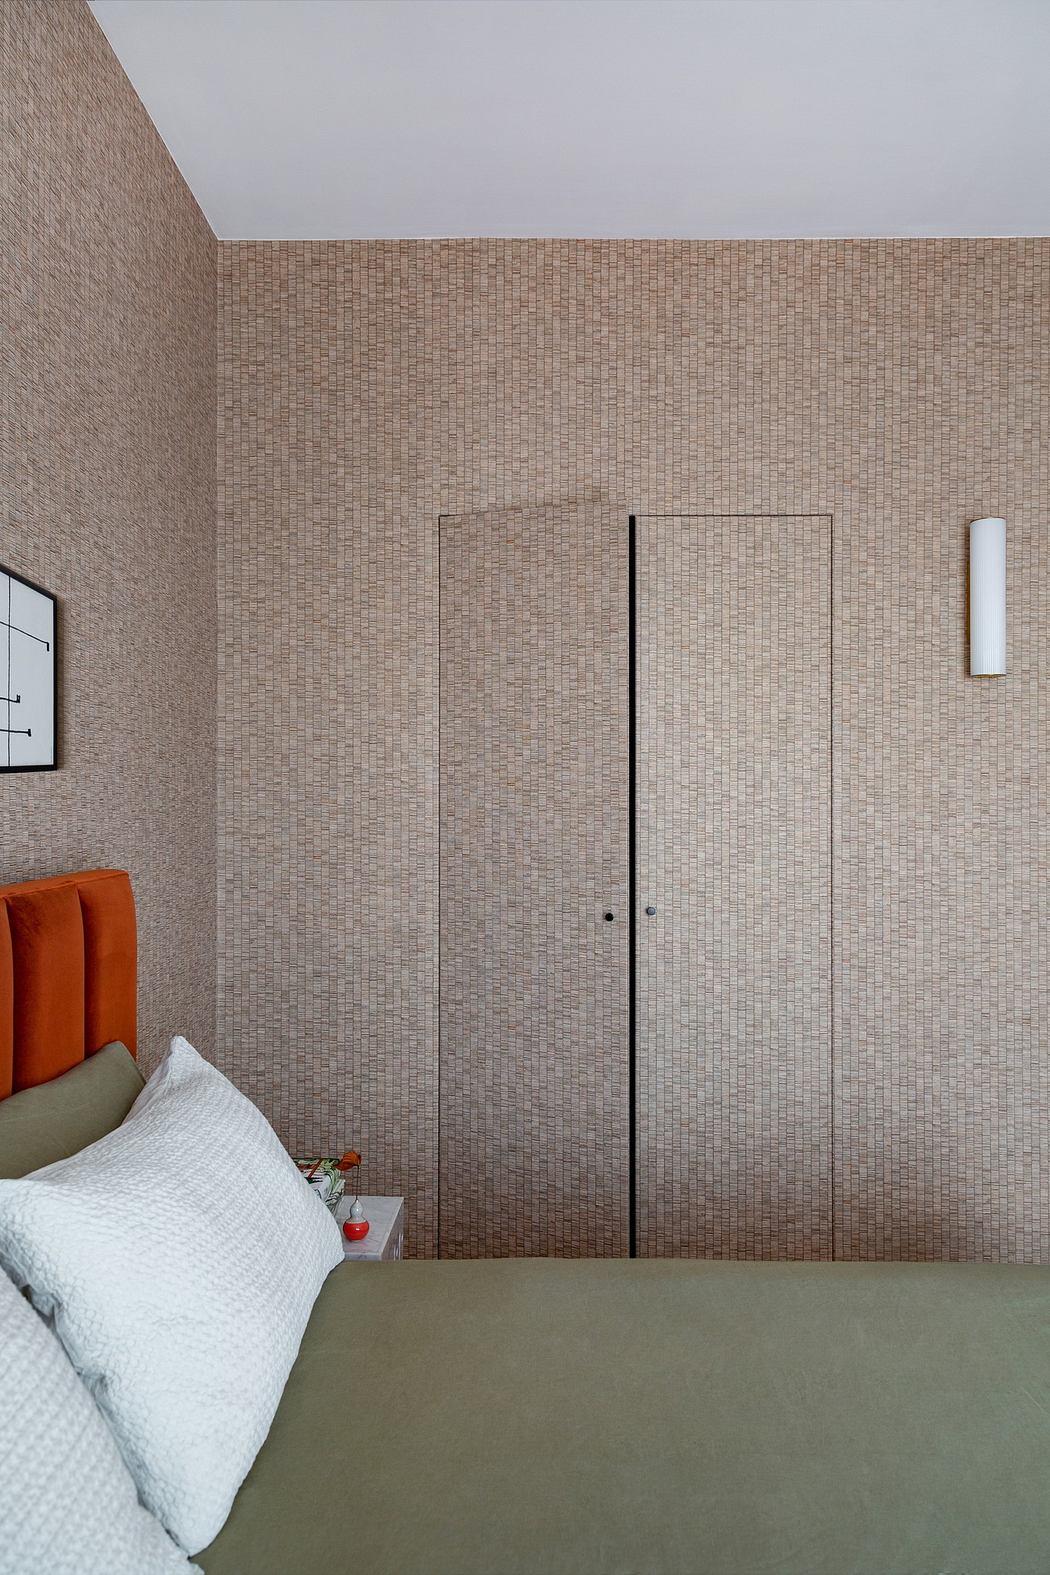 Minimalist bedroom with textured wall and concealed door